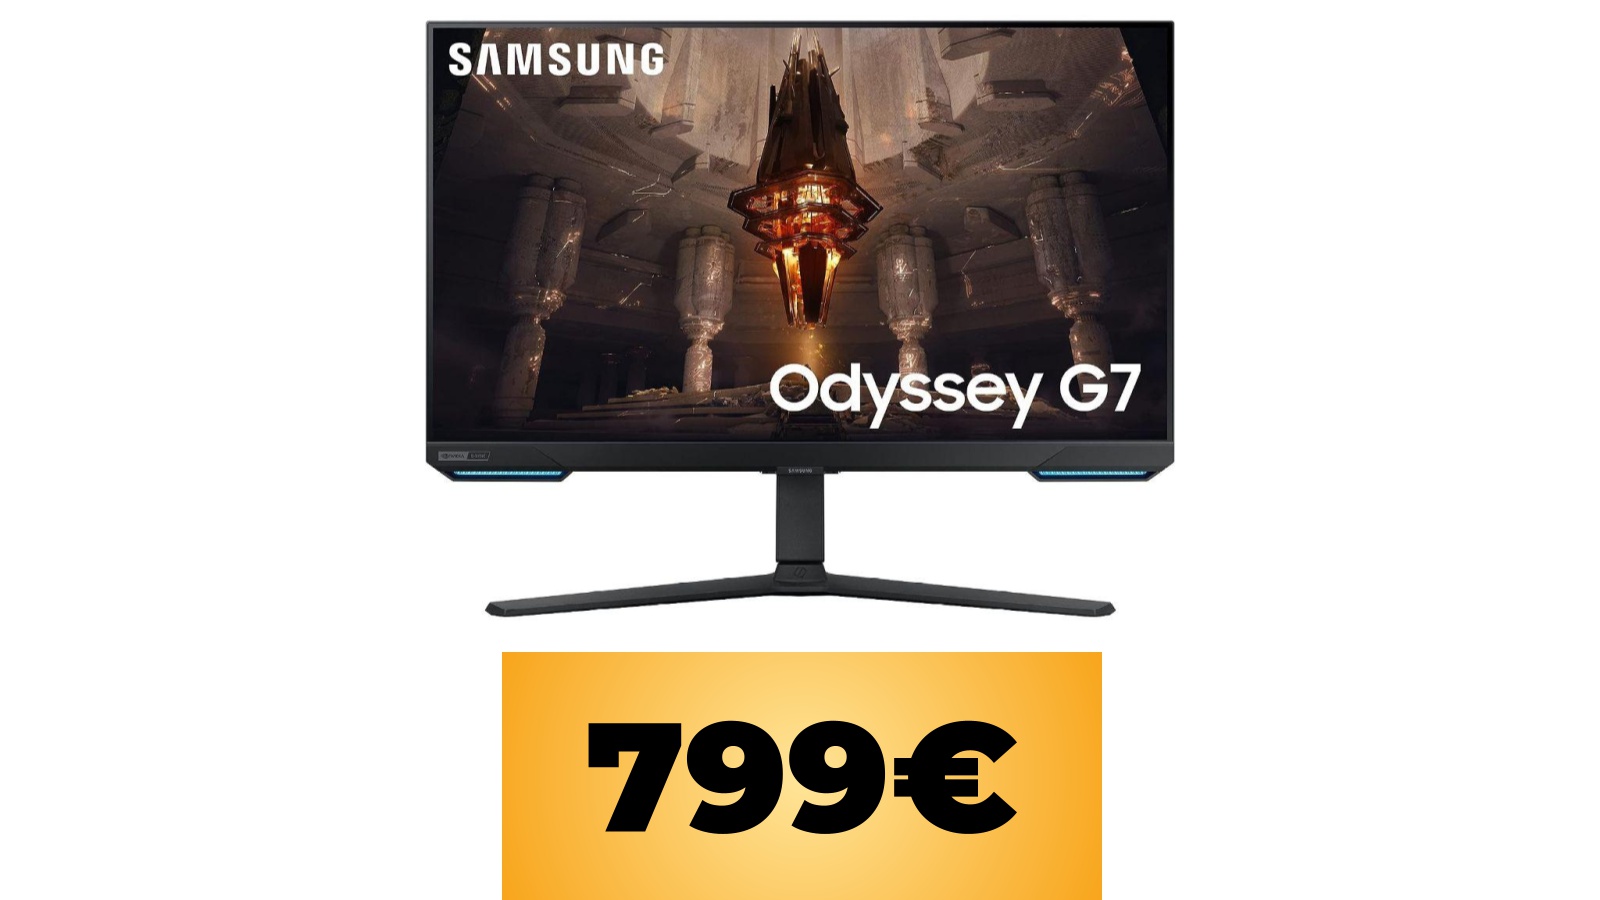 Gaming Odyssey G7, monitor 4K 144 Hz da 32 pollici: l'offerta  arriva  al prezzo minimo storico 